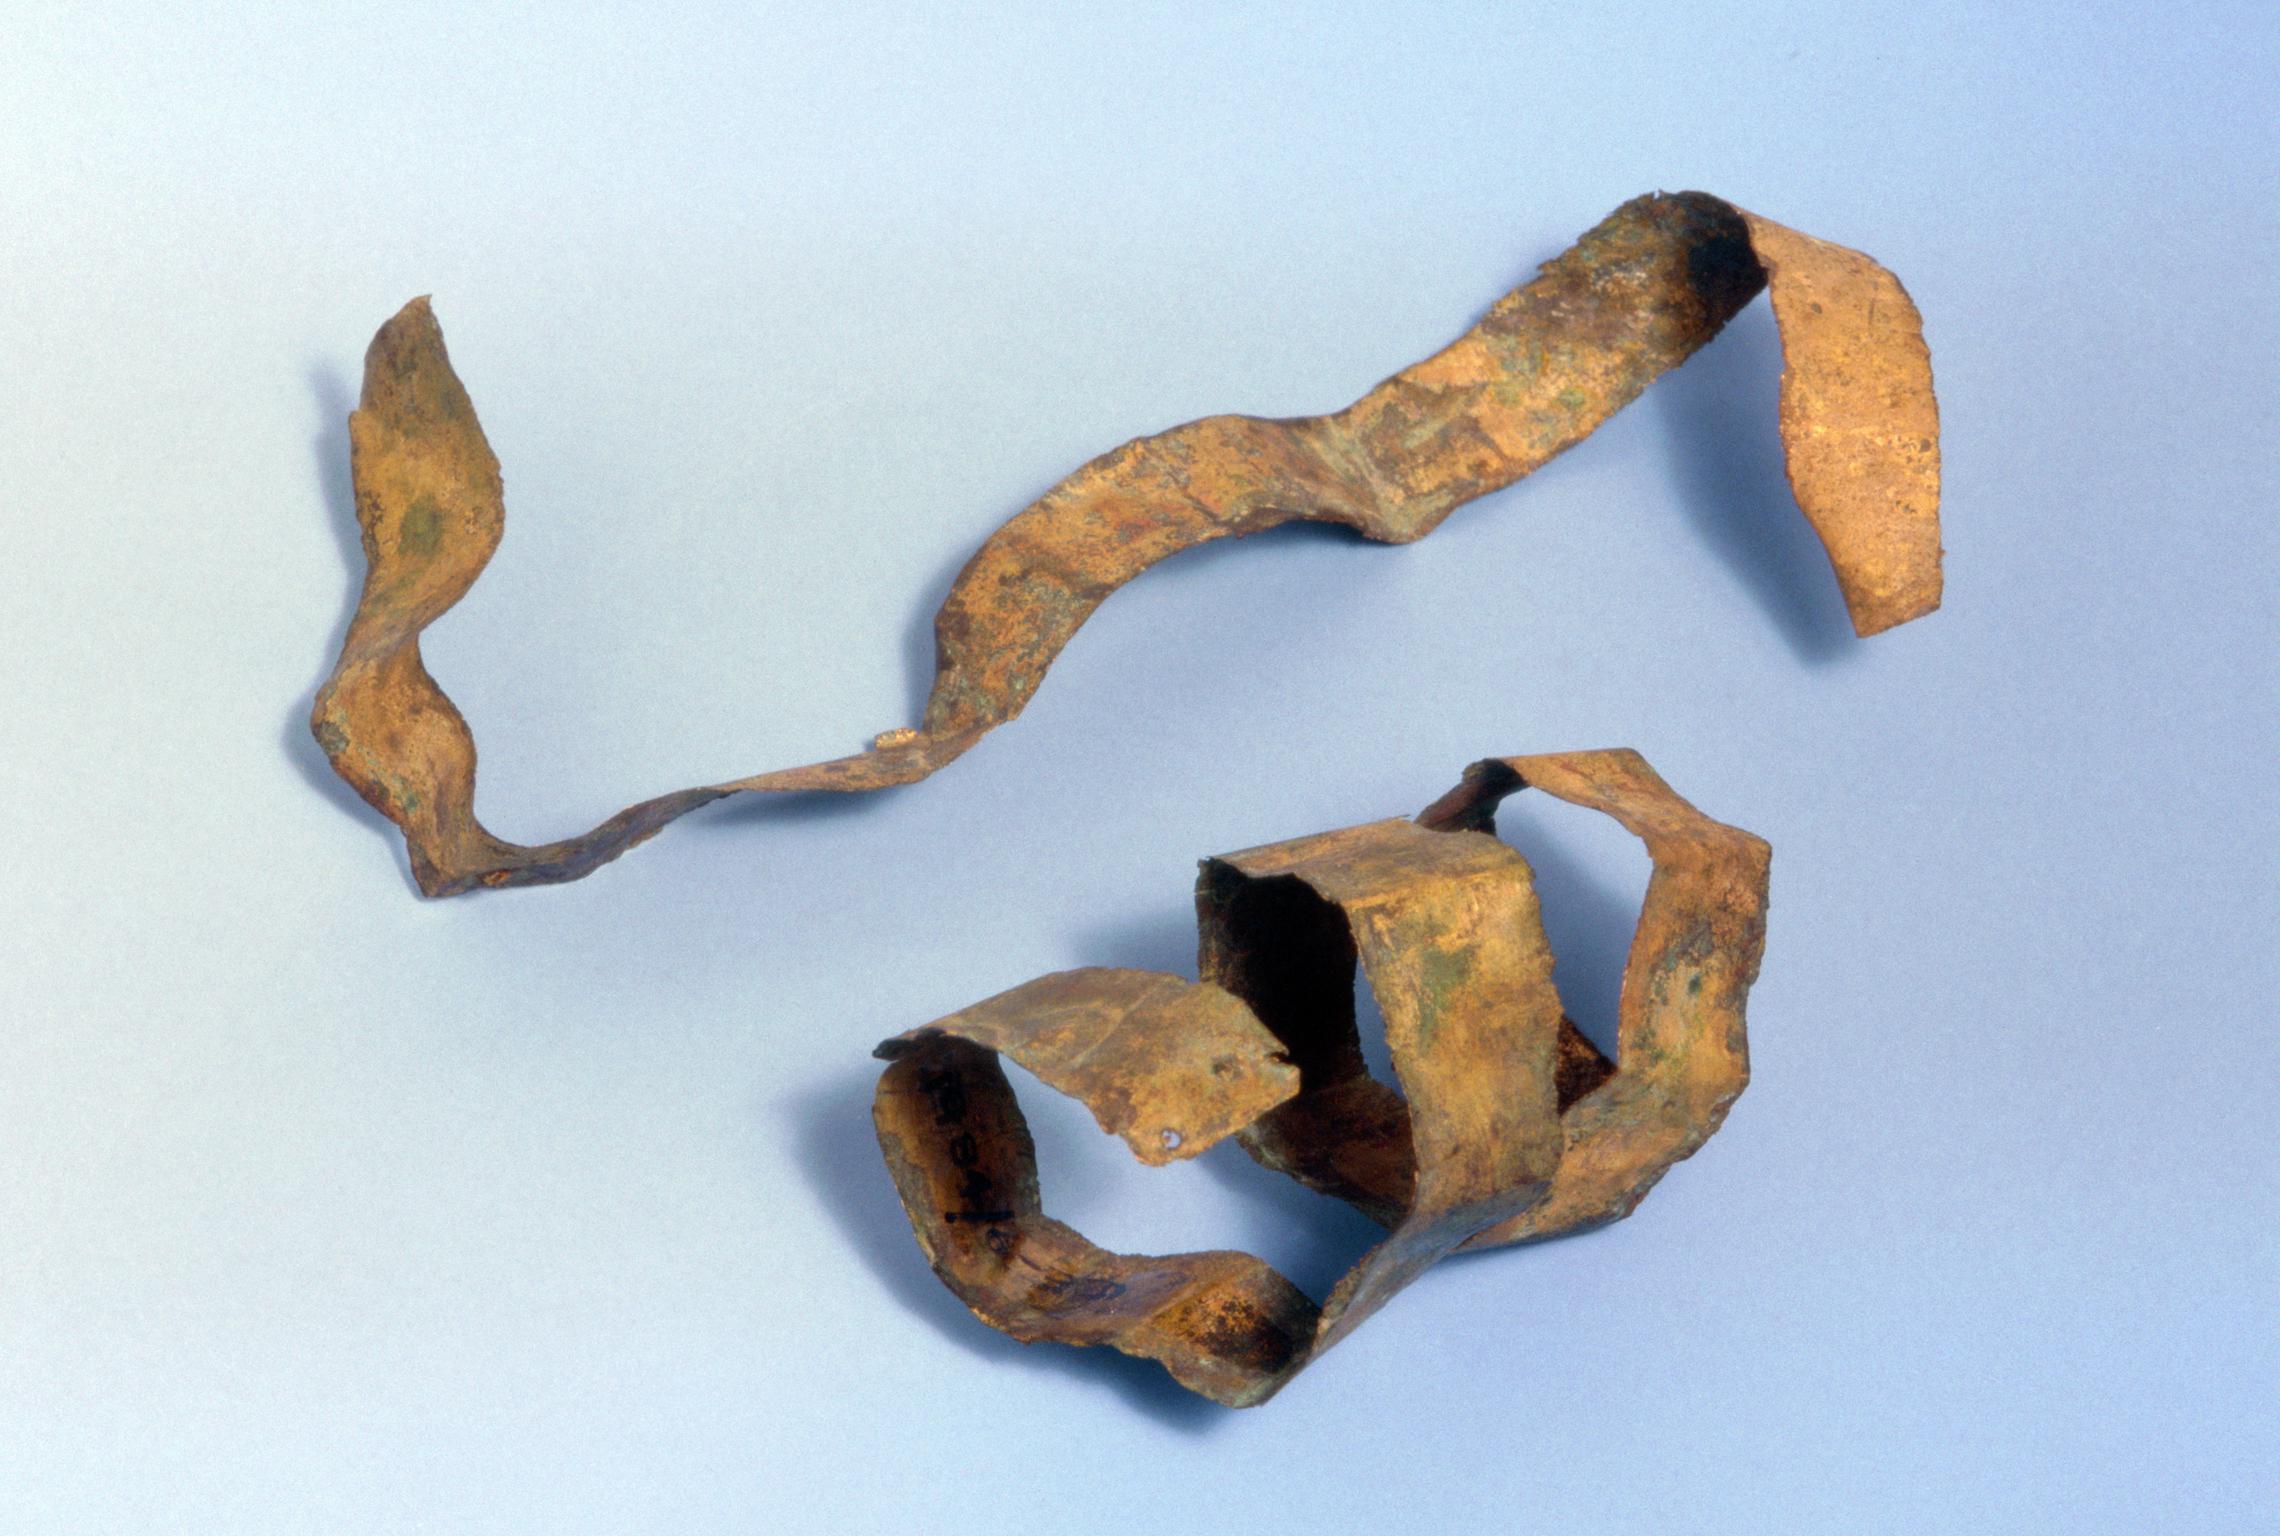 sceptre bindings from Llyn Cerrig Bach